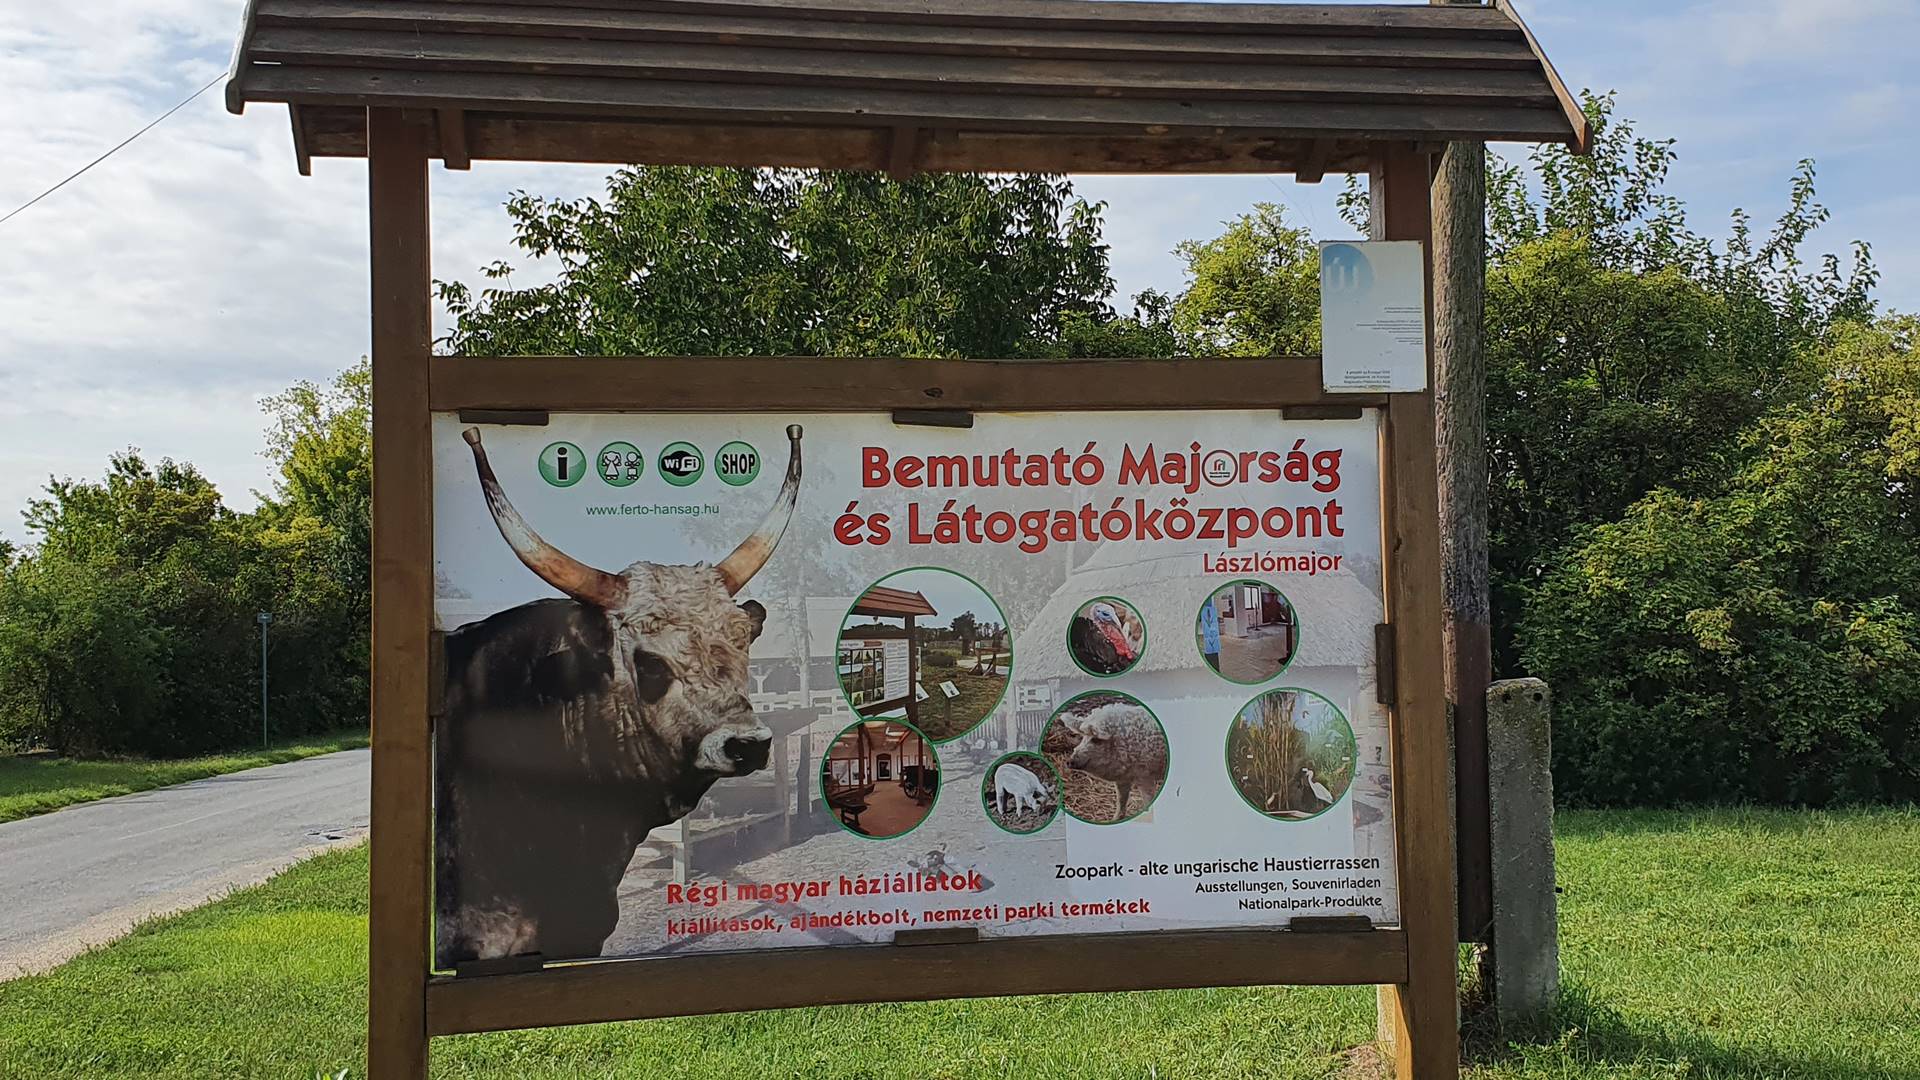 laszlomajor-bemutato-majorsag-ferto-hansag-nemzeti-park